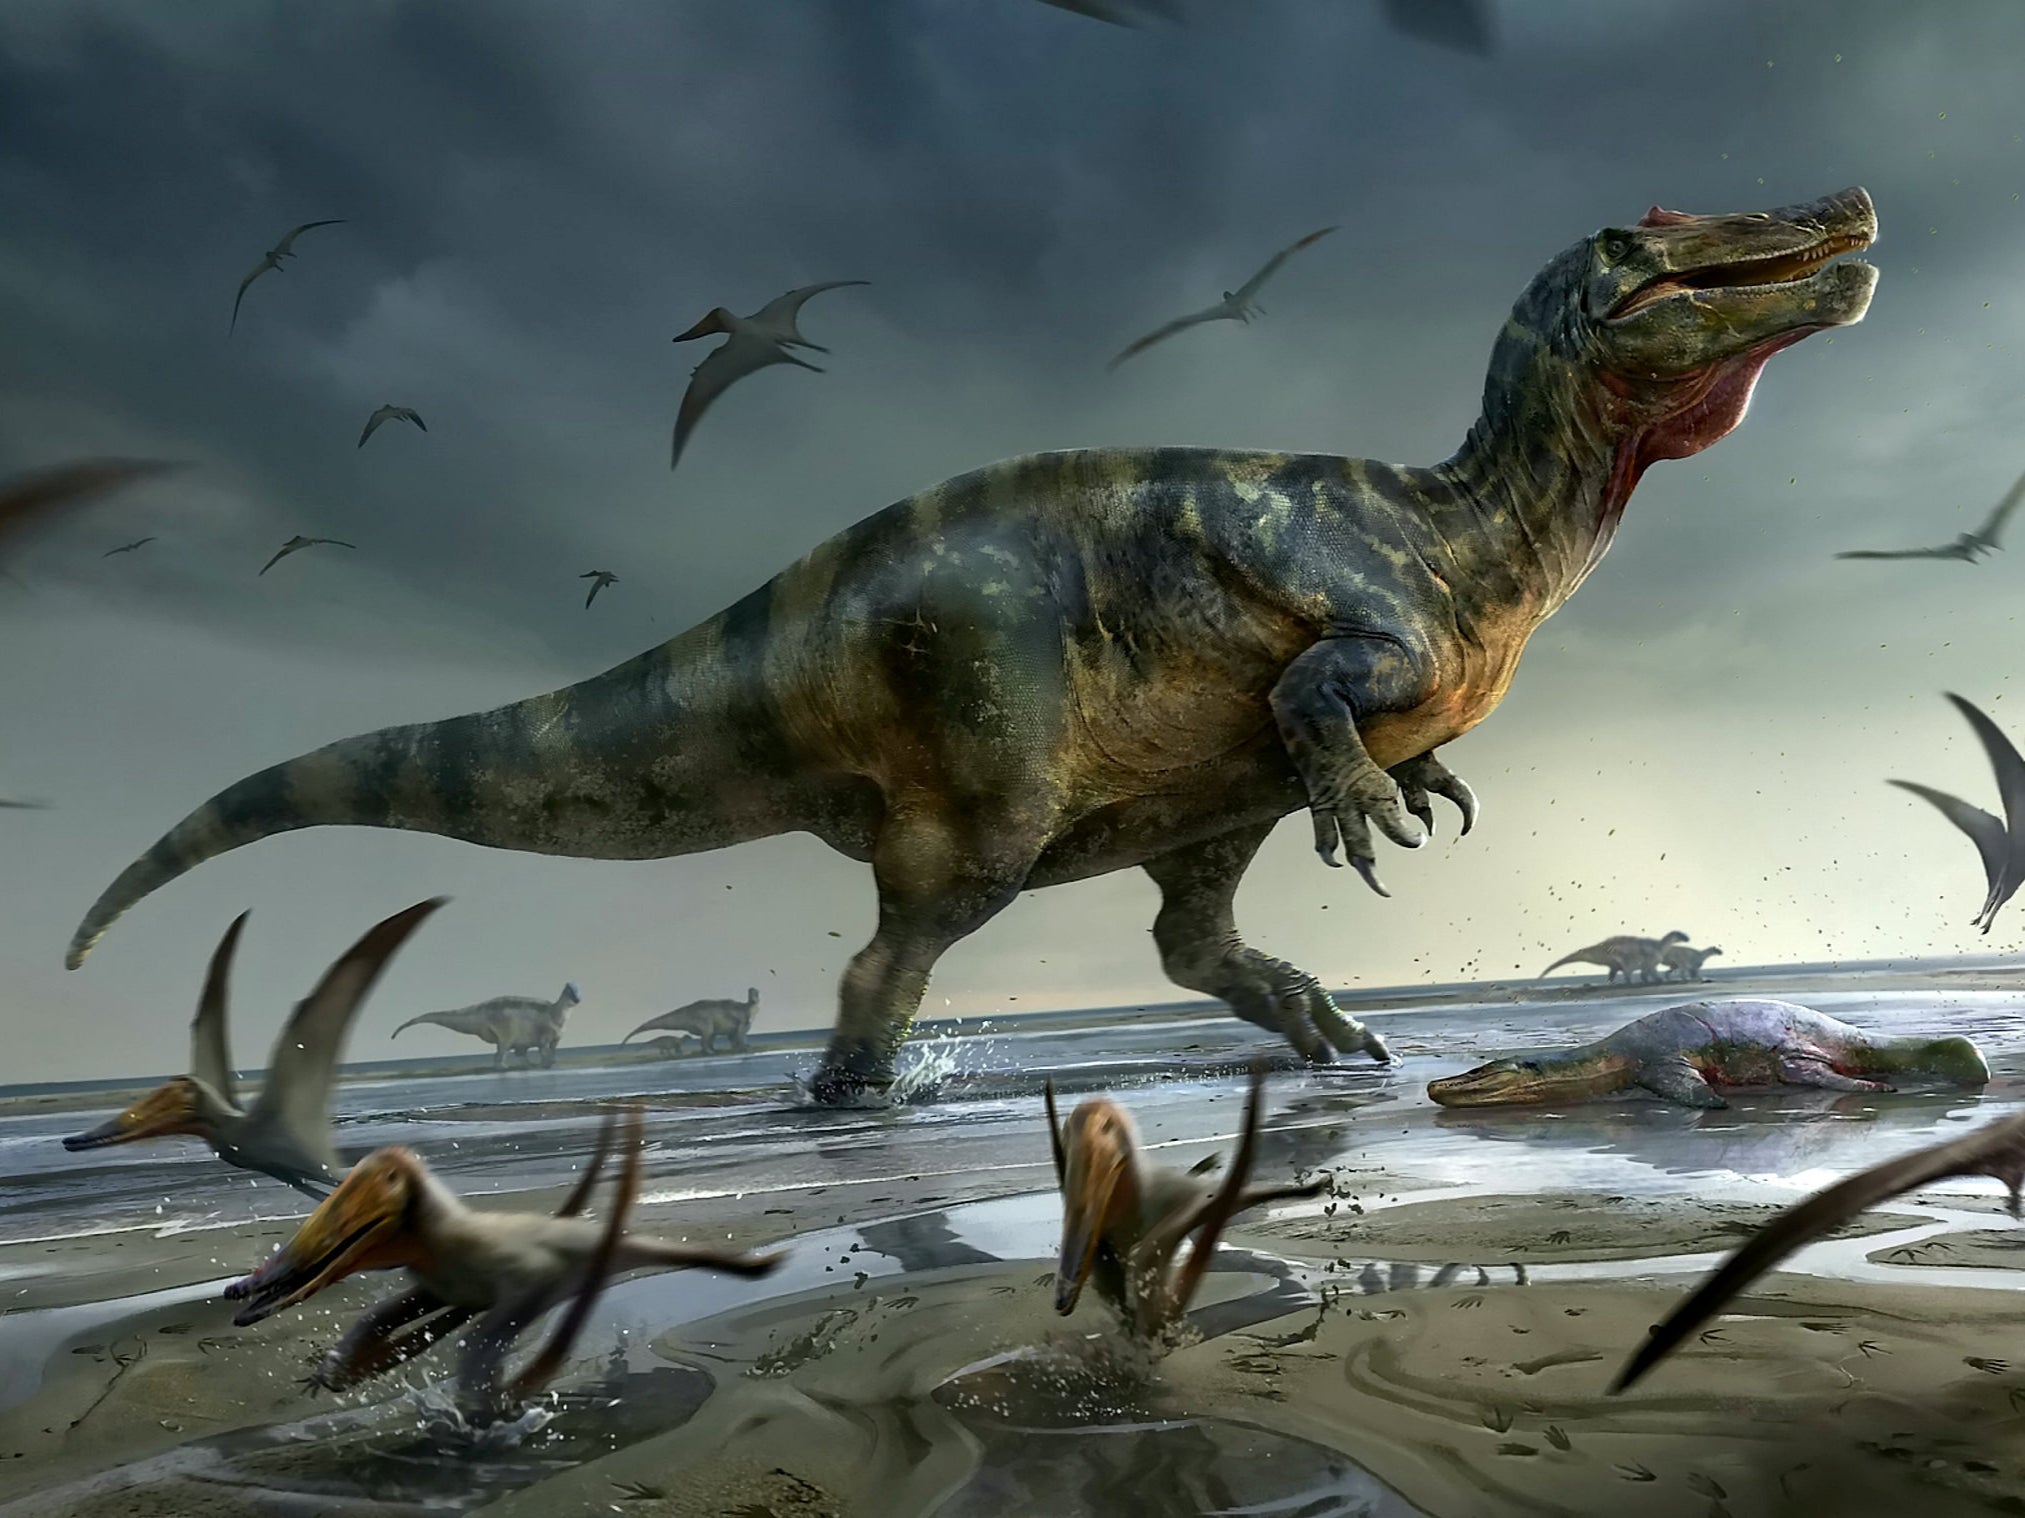 Massive creature had a face like a crocodile, razor-sharp teeth and claws and a whip-like tail, experts say